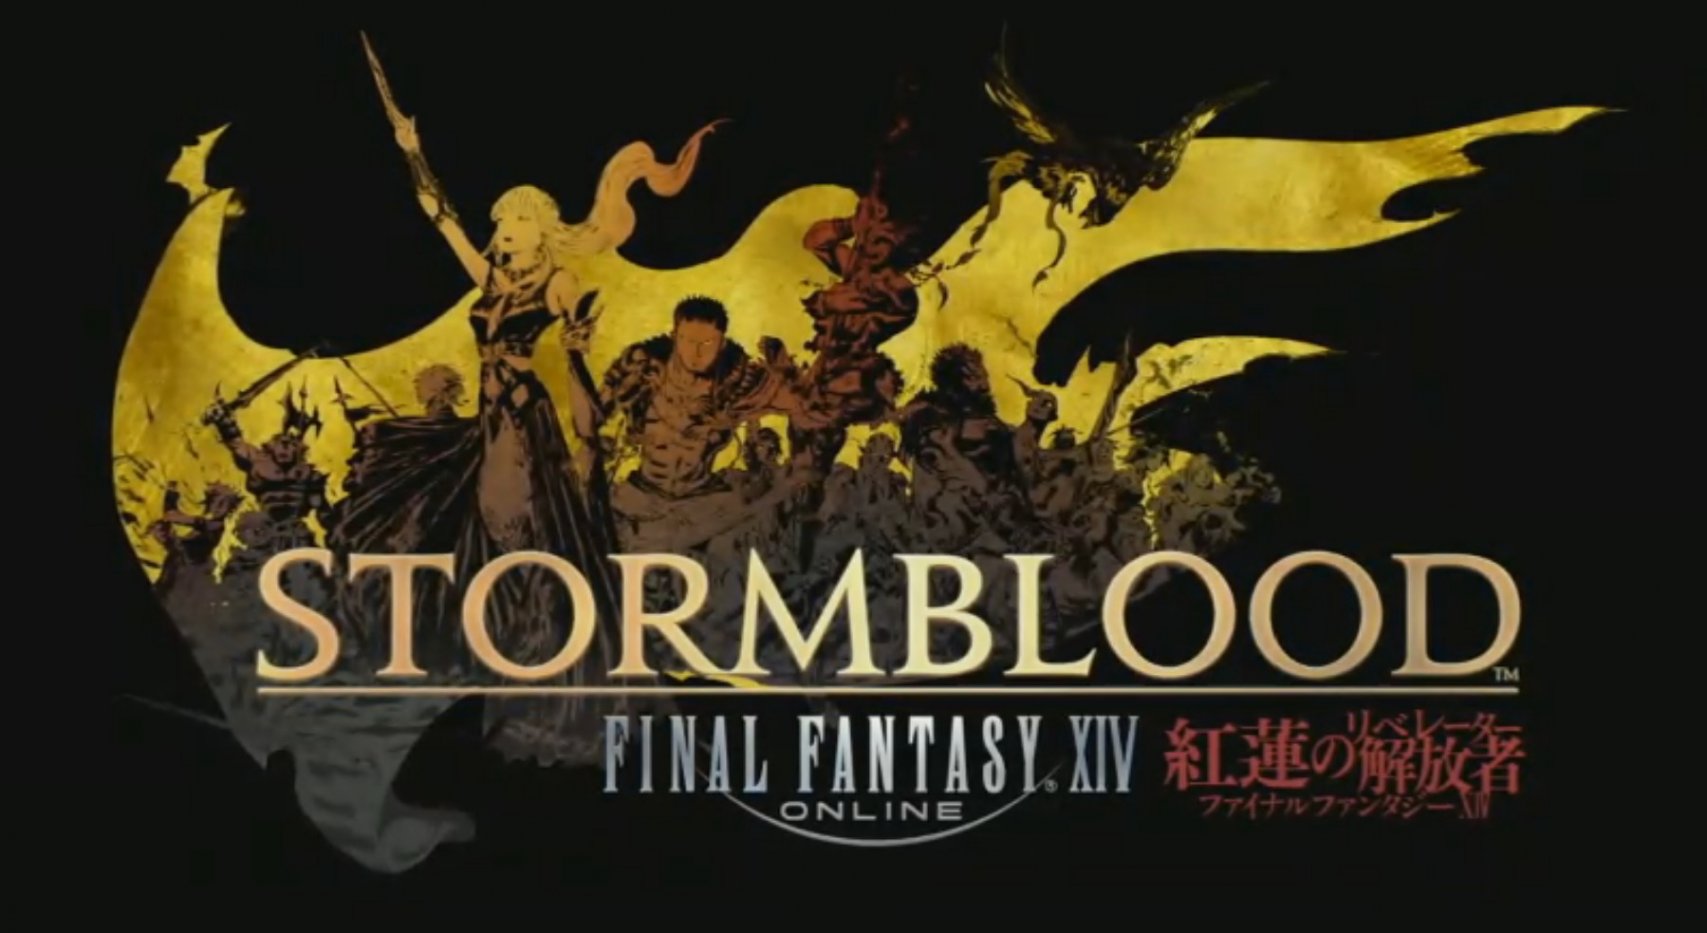 Final Fantasy XIV: Stormblood Announced-ffxiv40logo-jpg